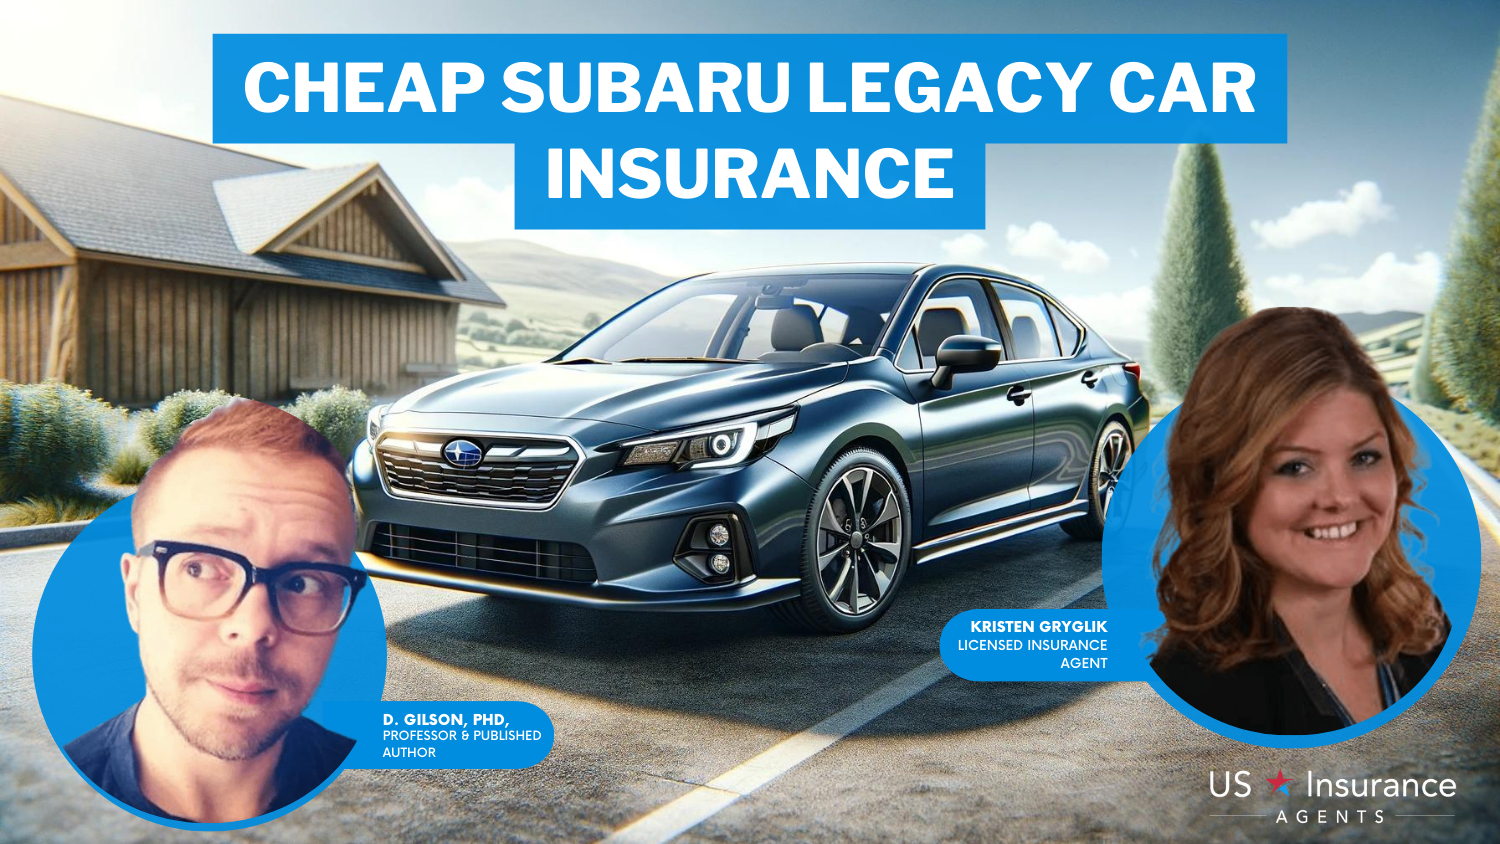 Cheap Subaru Legacy Car Insurance: Liberty Mutual, Nationwide, and Travelers